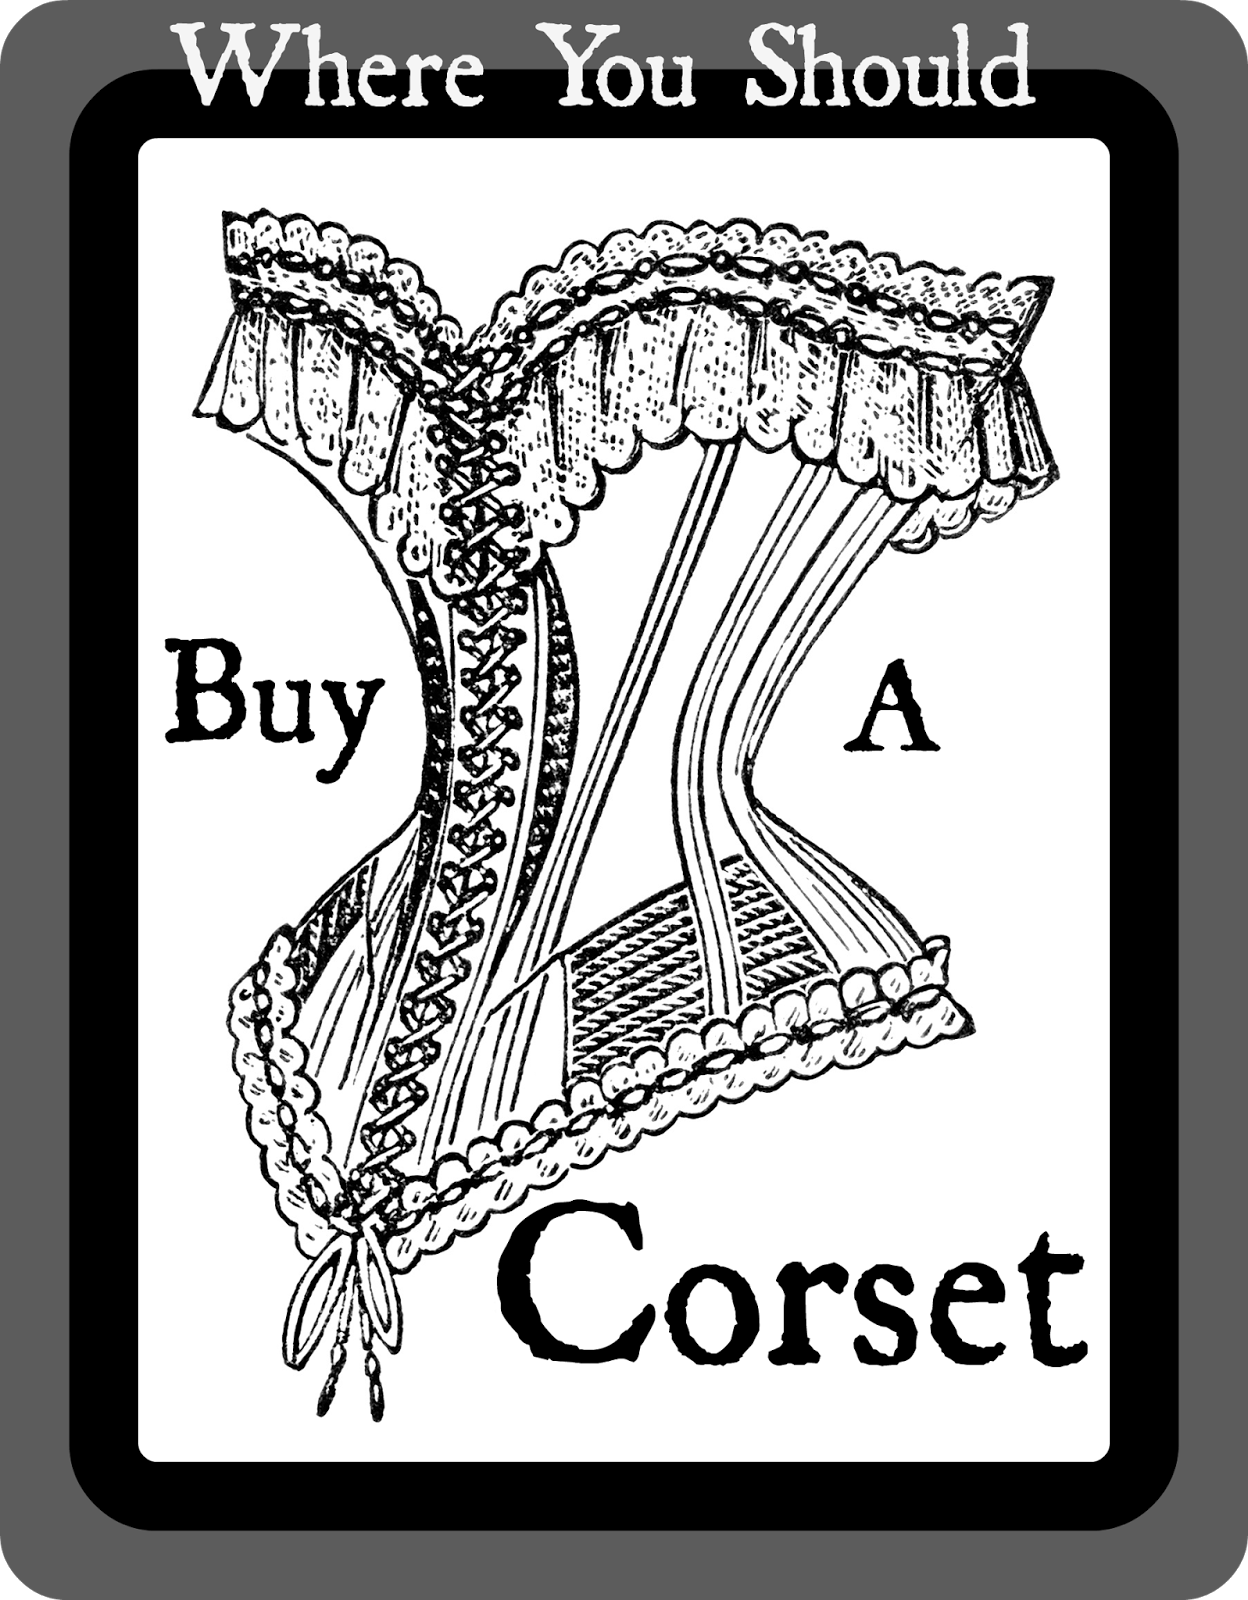 should+buy+corset.png